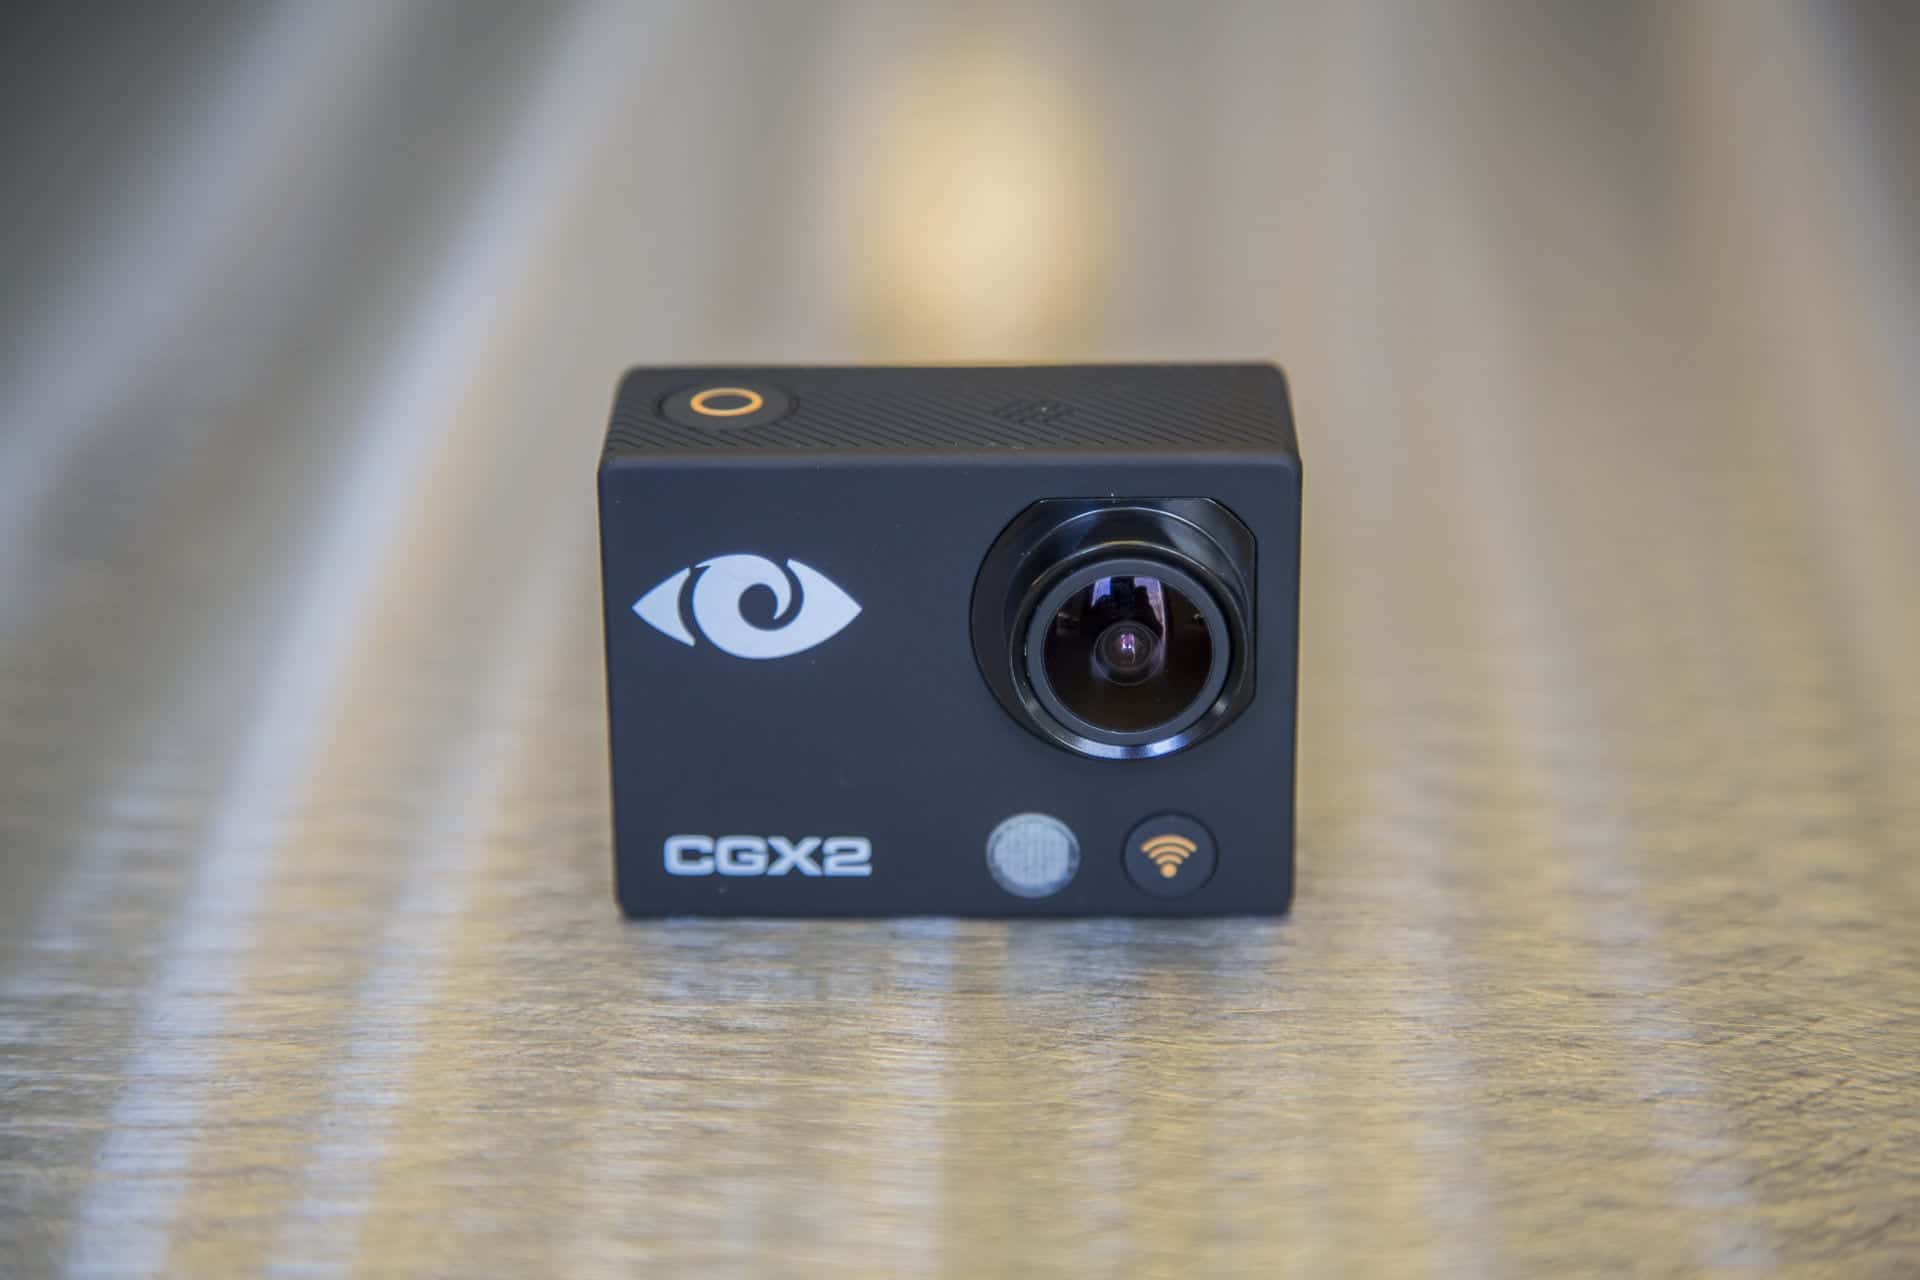 Caméra Cyclops Gear CGX2 4k Wi-Fi